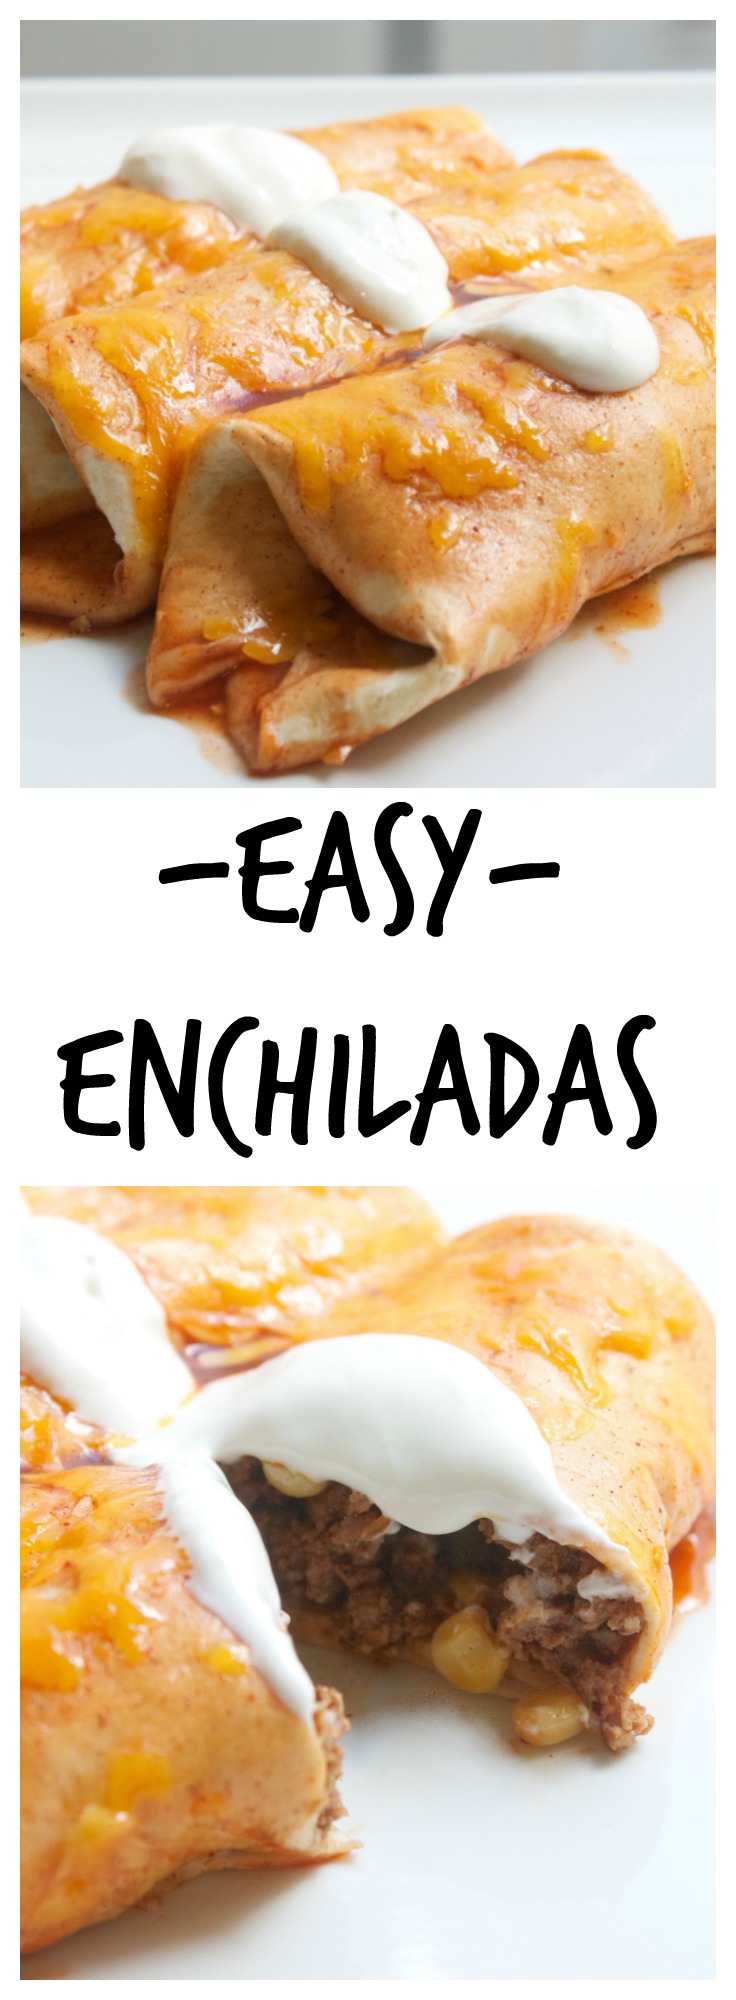 easy enchiladas